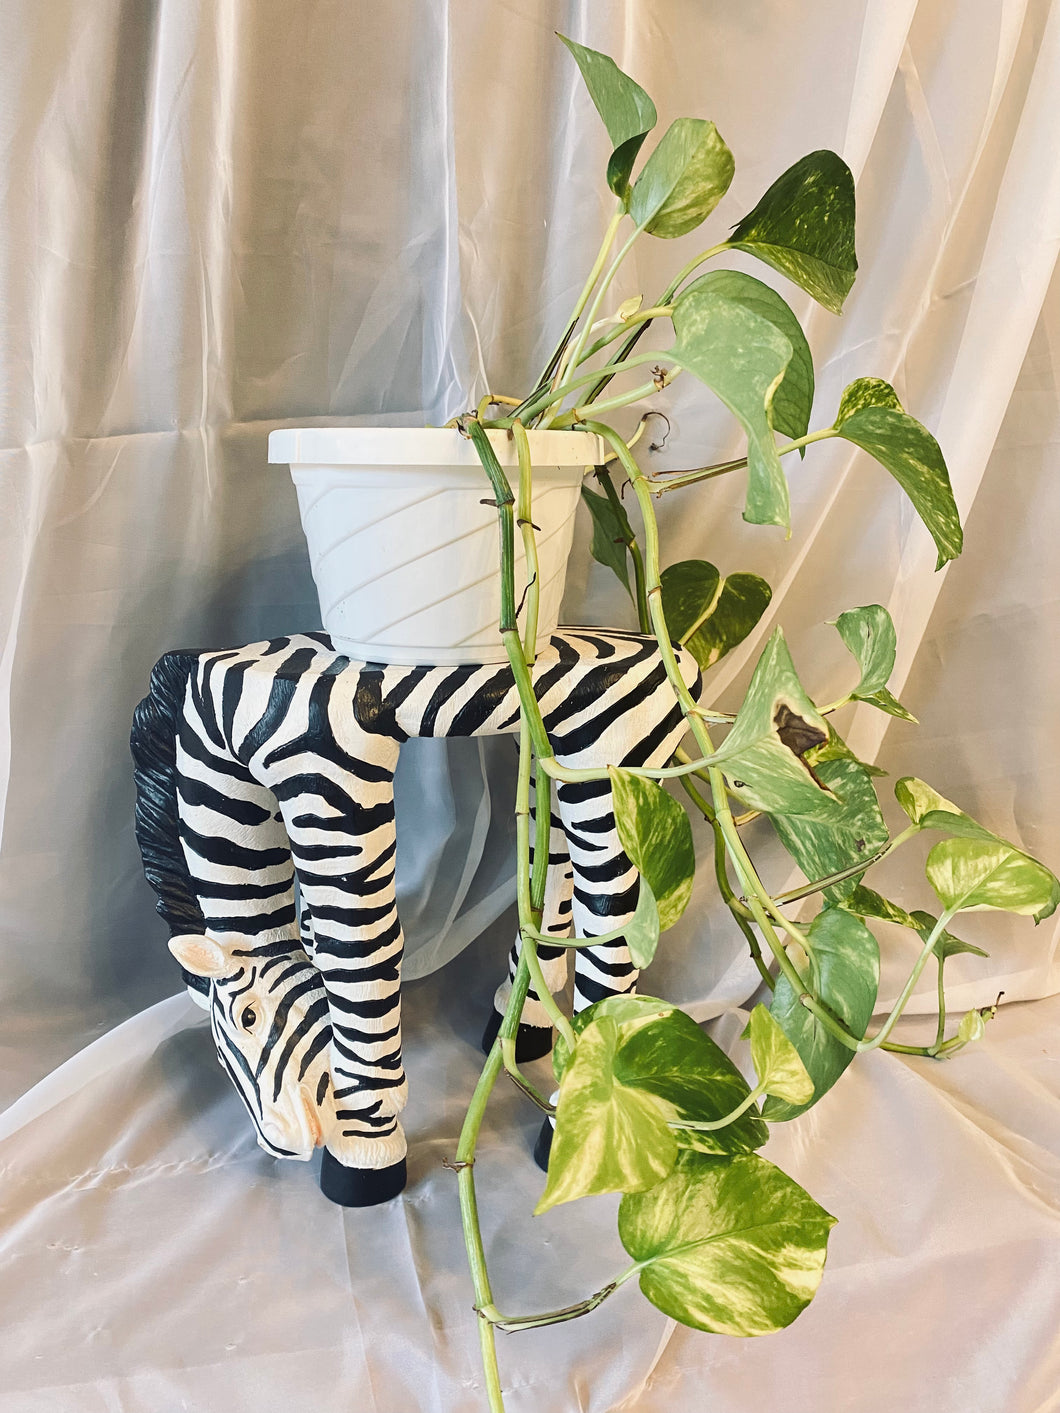 2000’s Resin Zebra Plant Stand Sculpture